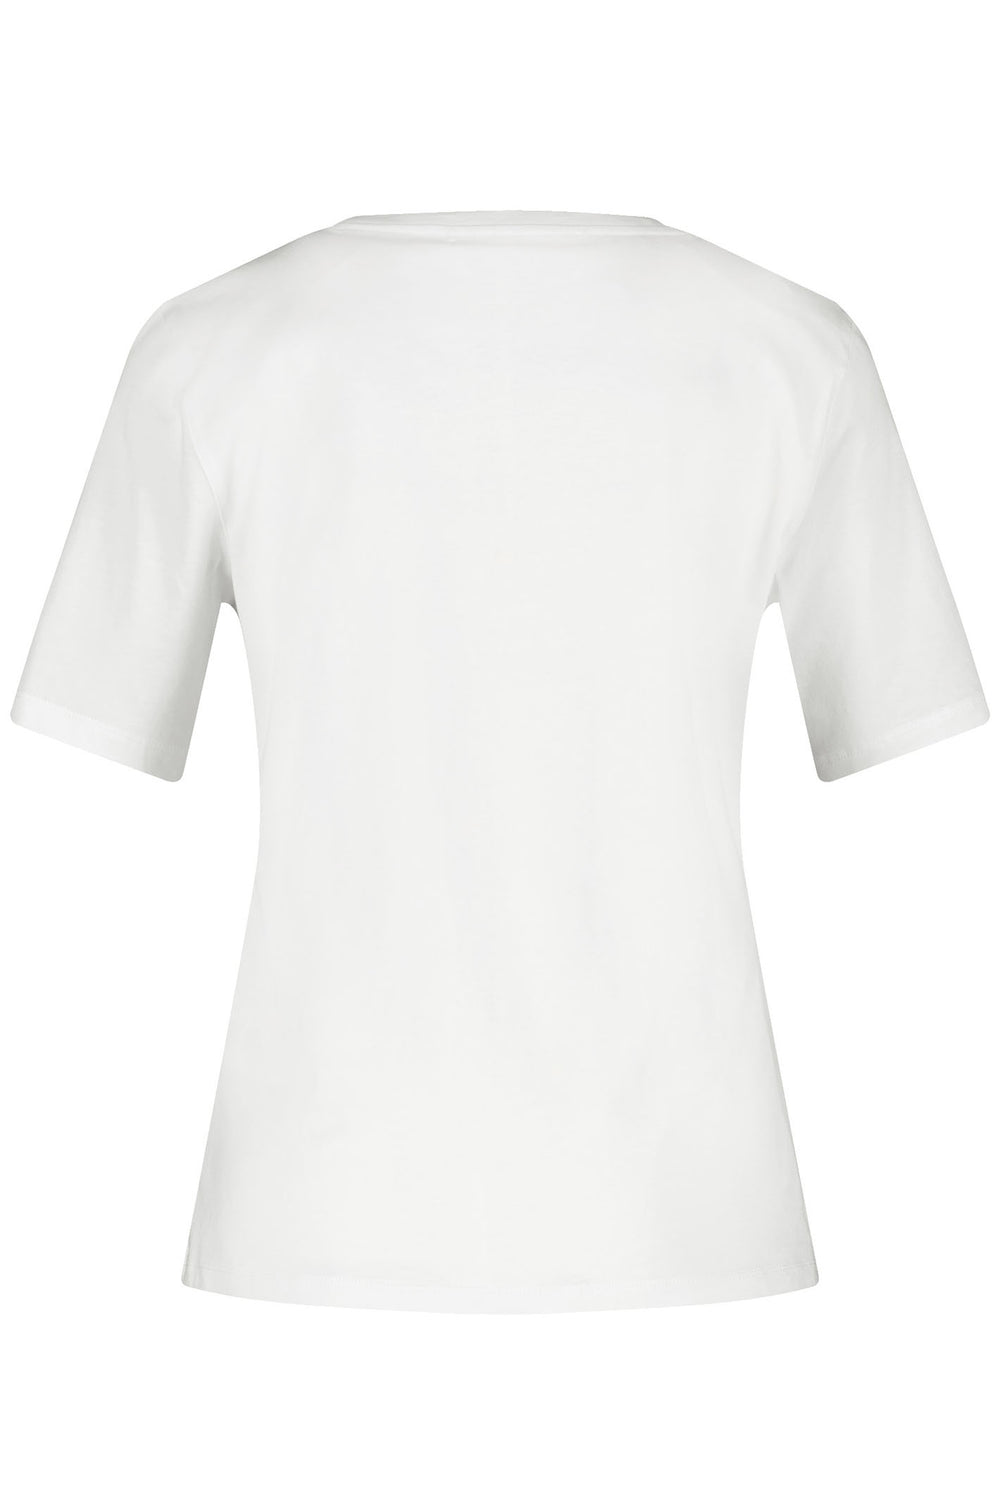 Gerry Weber 270057-44032 White Diamante Detail T-Shirt - Dotique